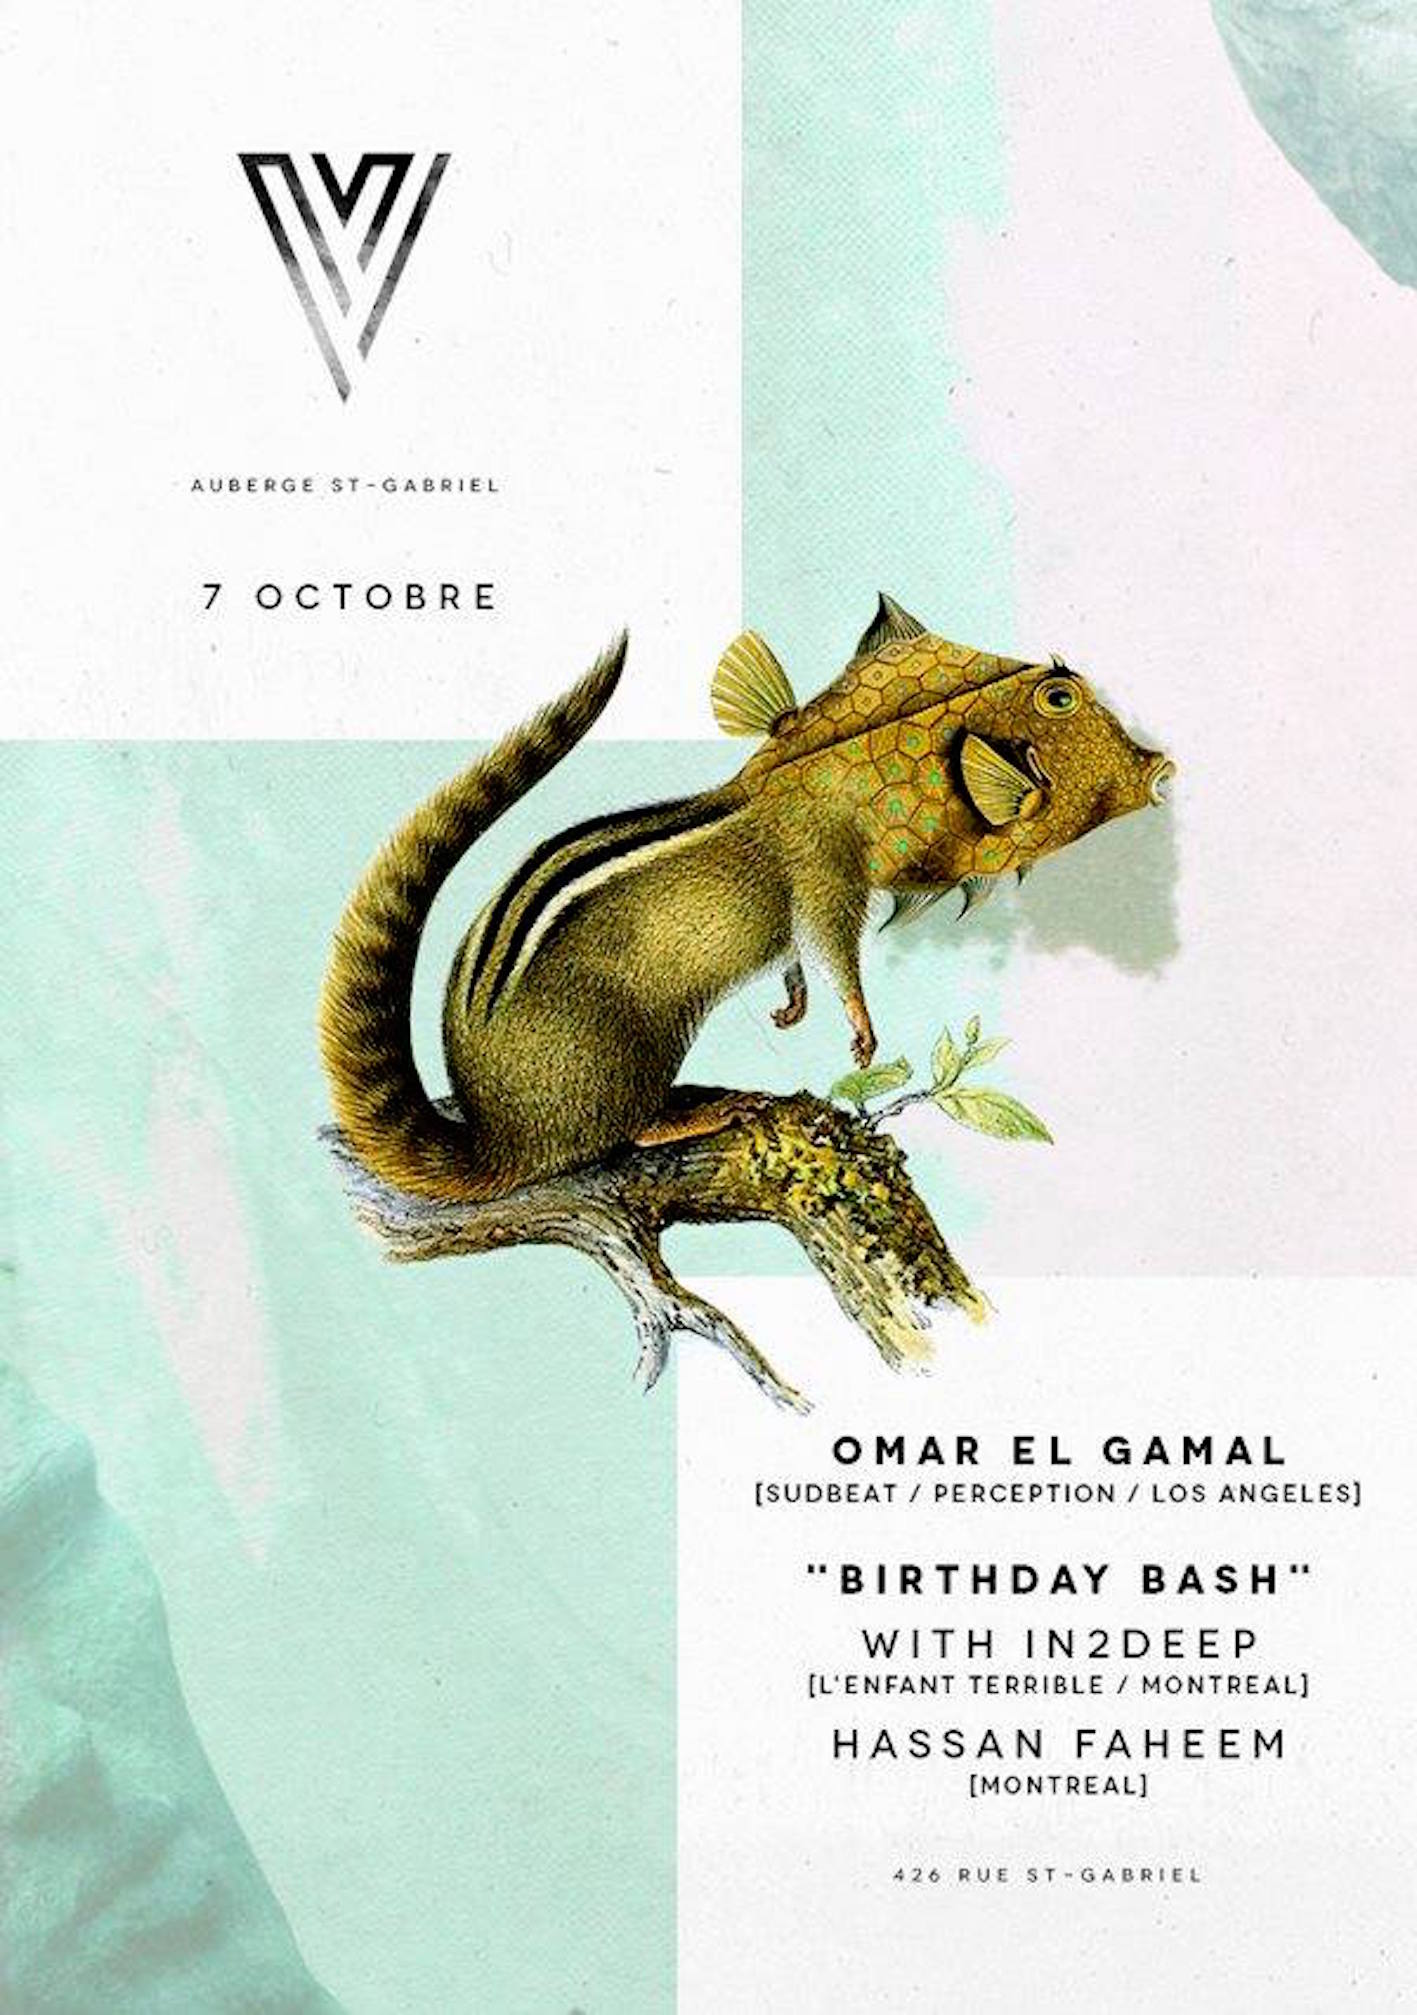 Omar El Gamal returns to Montreal with a “Birthday Bash” Gig @ Velvet